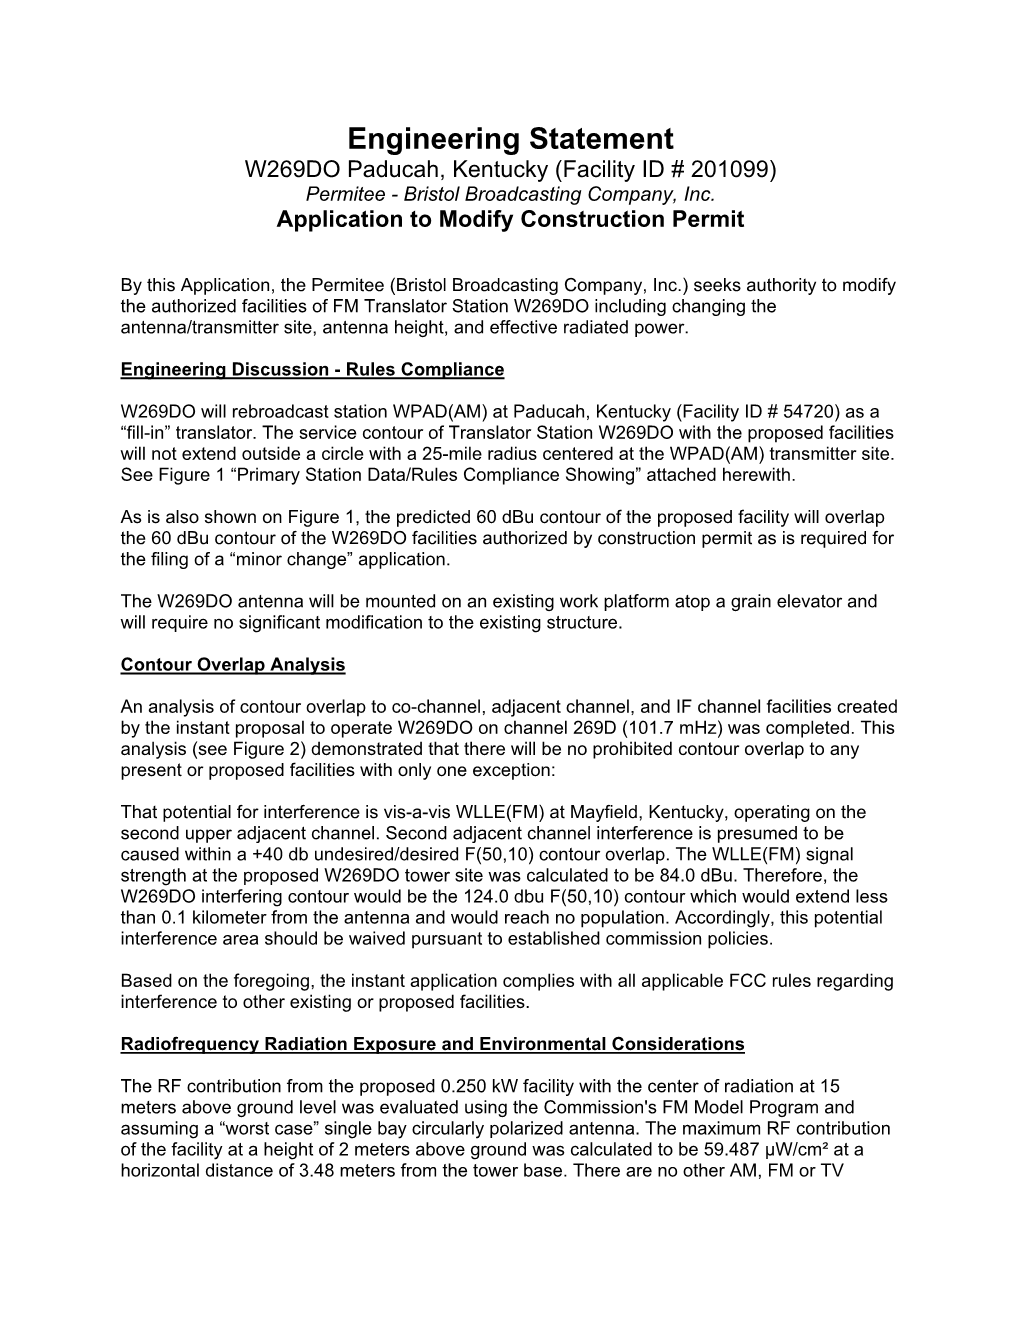 Engineering Statement W269DO Paducah, Kentucky (Facility ID # 201099) Permitee - Bristol Broadcasting Company, Inc